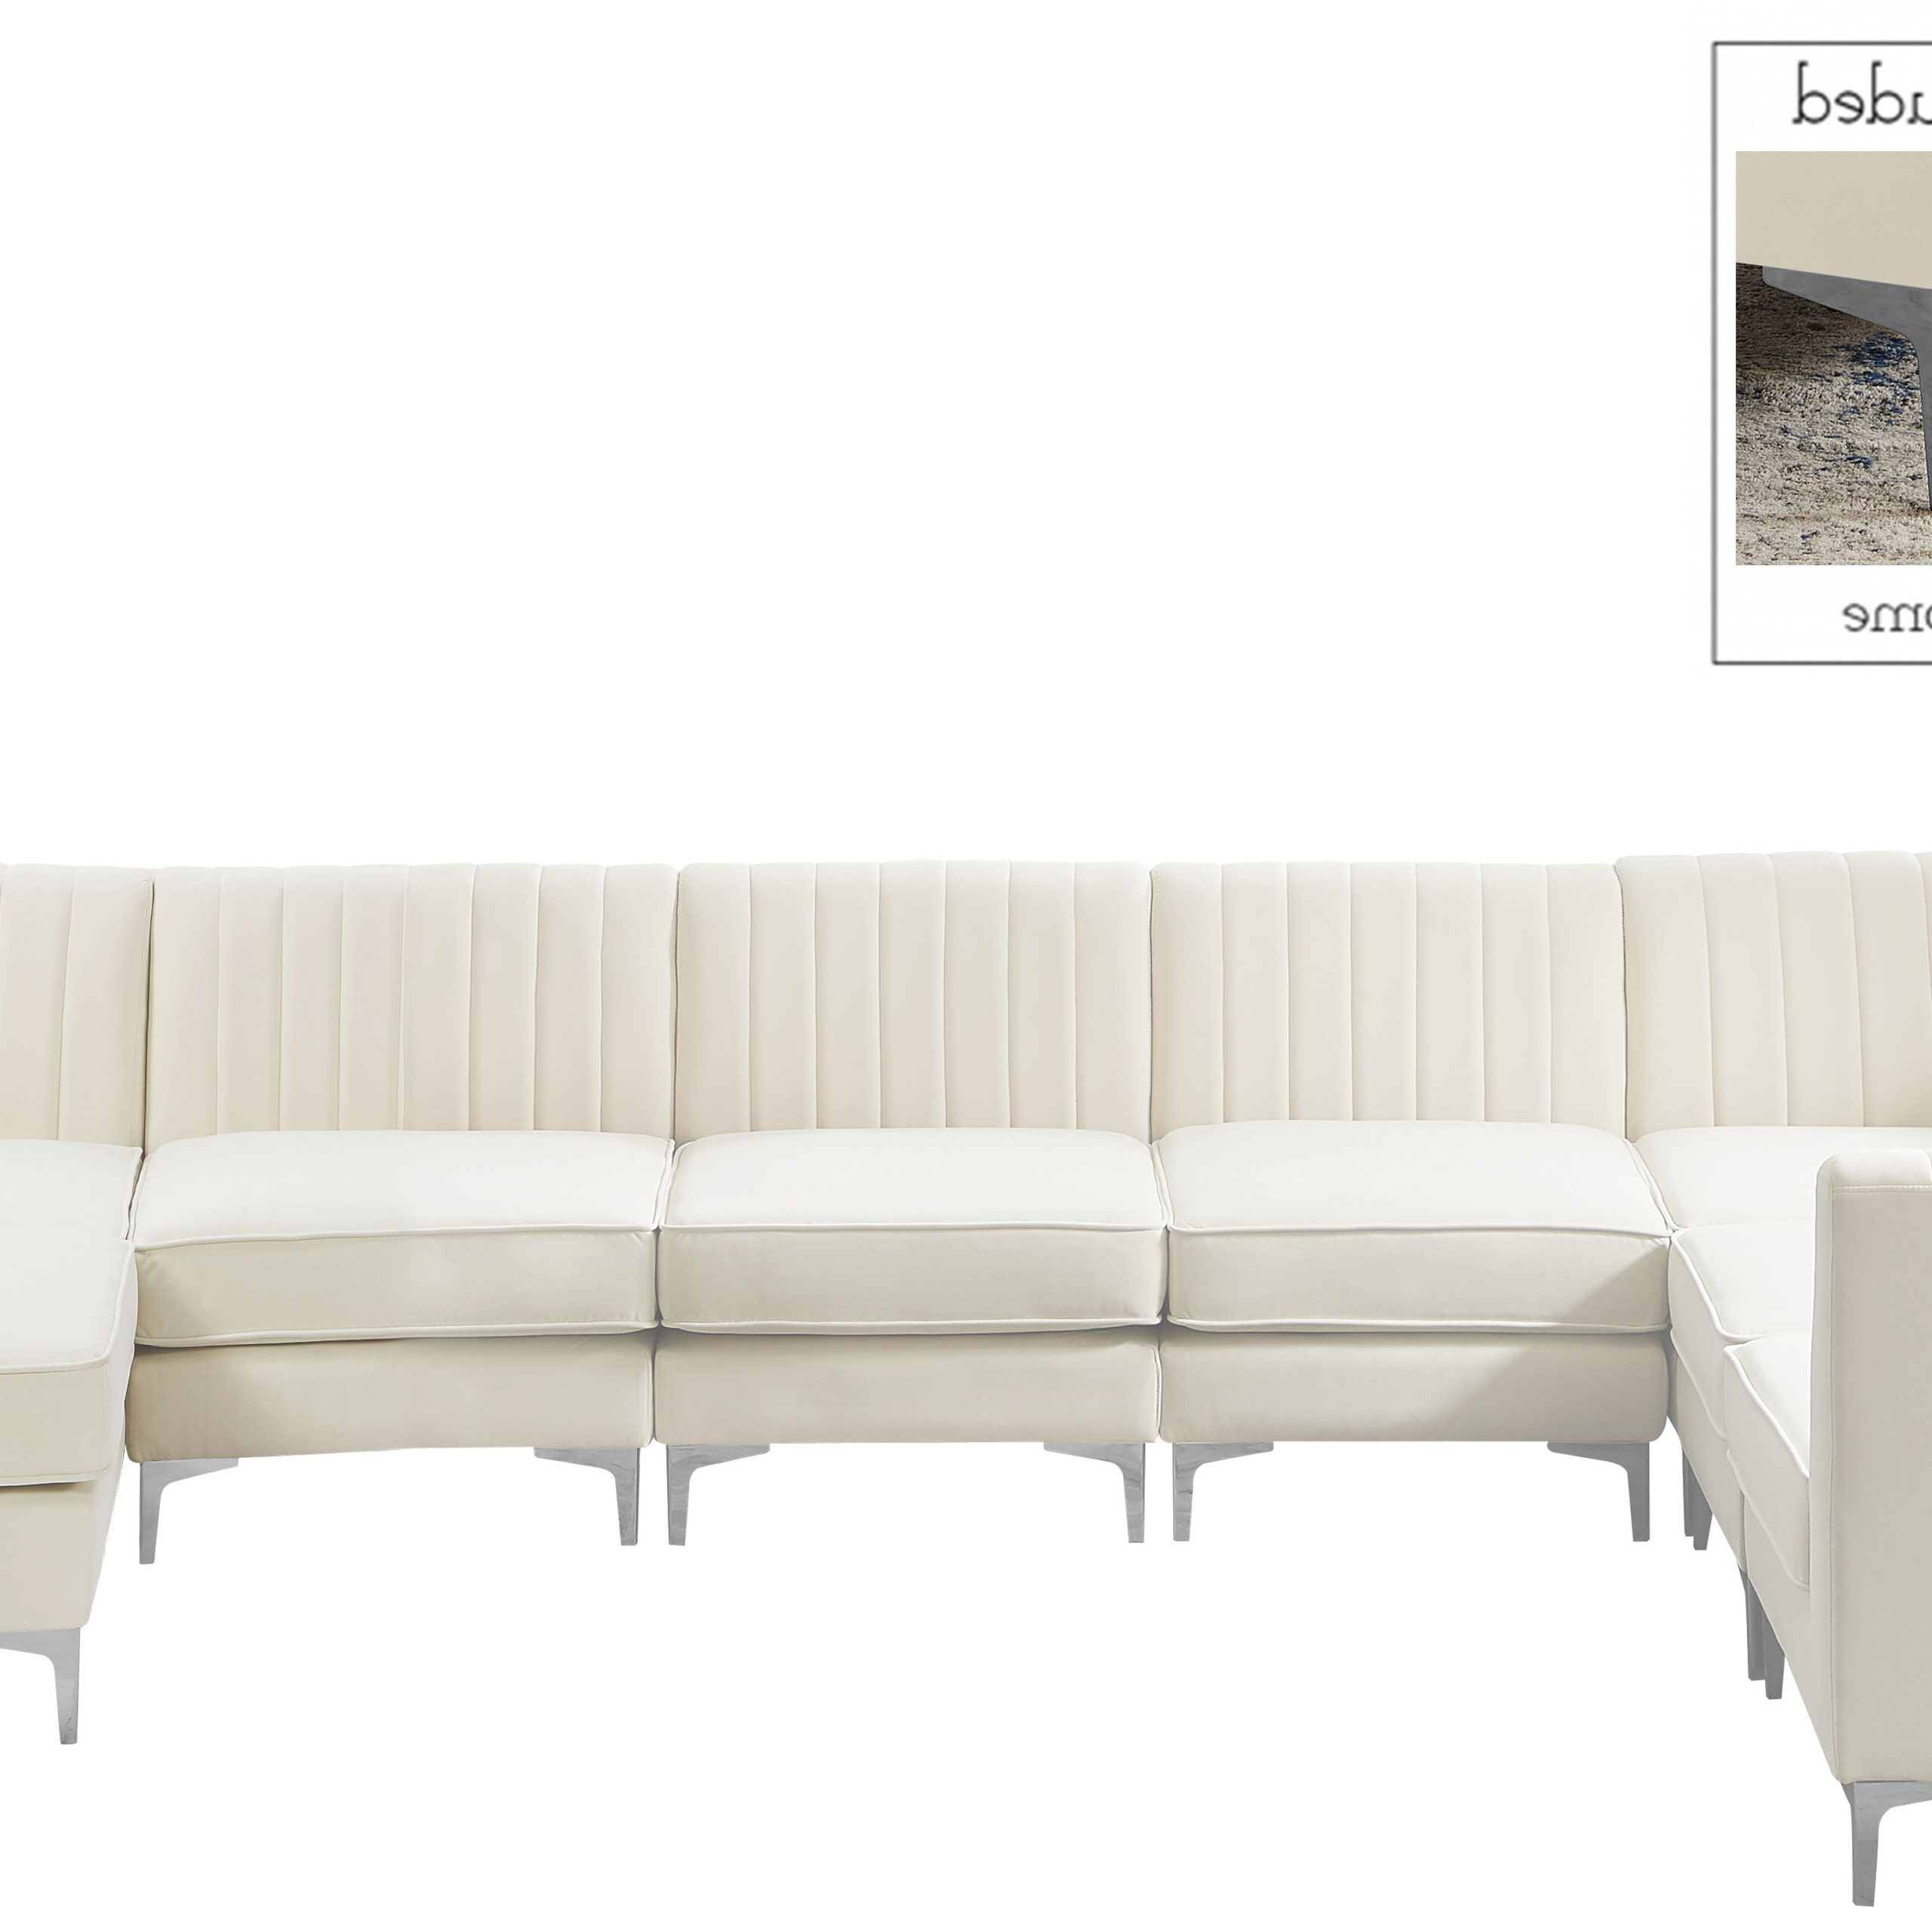 Alina Cream Velvet Modular Sectional – New Lots Furniture Online Store For Cream Velvet Modular Sectionals (Gallery 4 of 20)